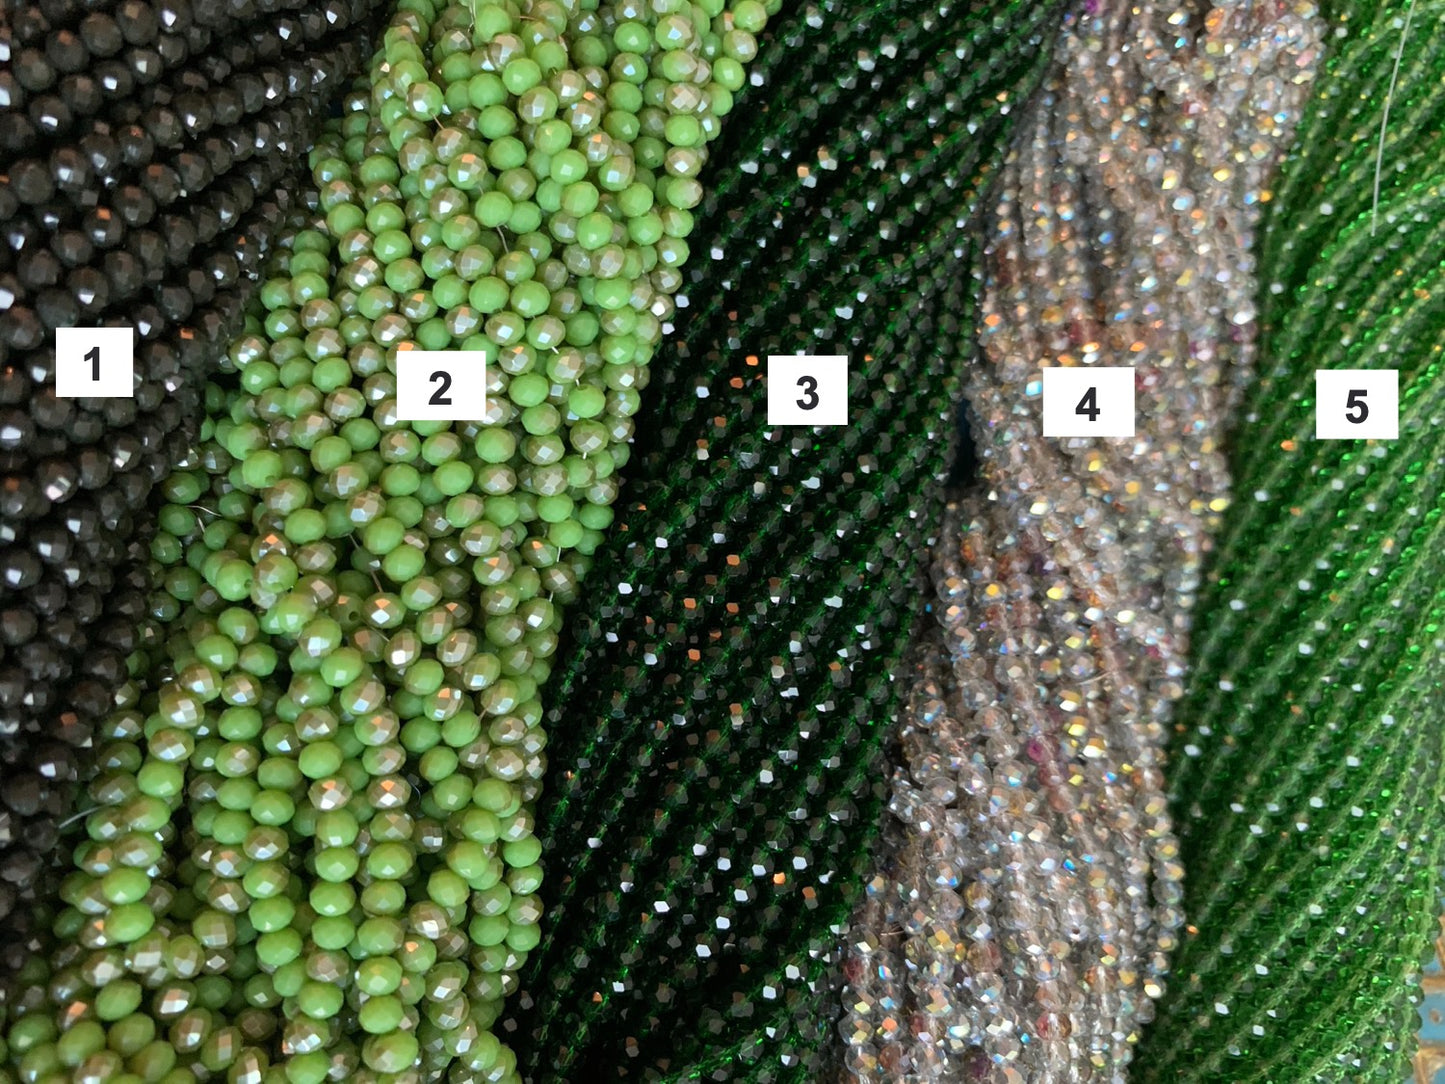 4mm Green Tones Rondelle Crystals / Cristales Verdes